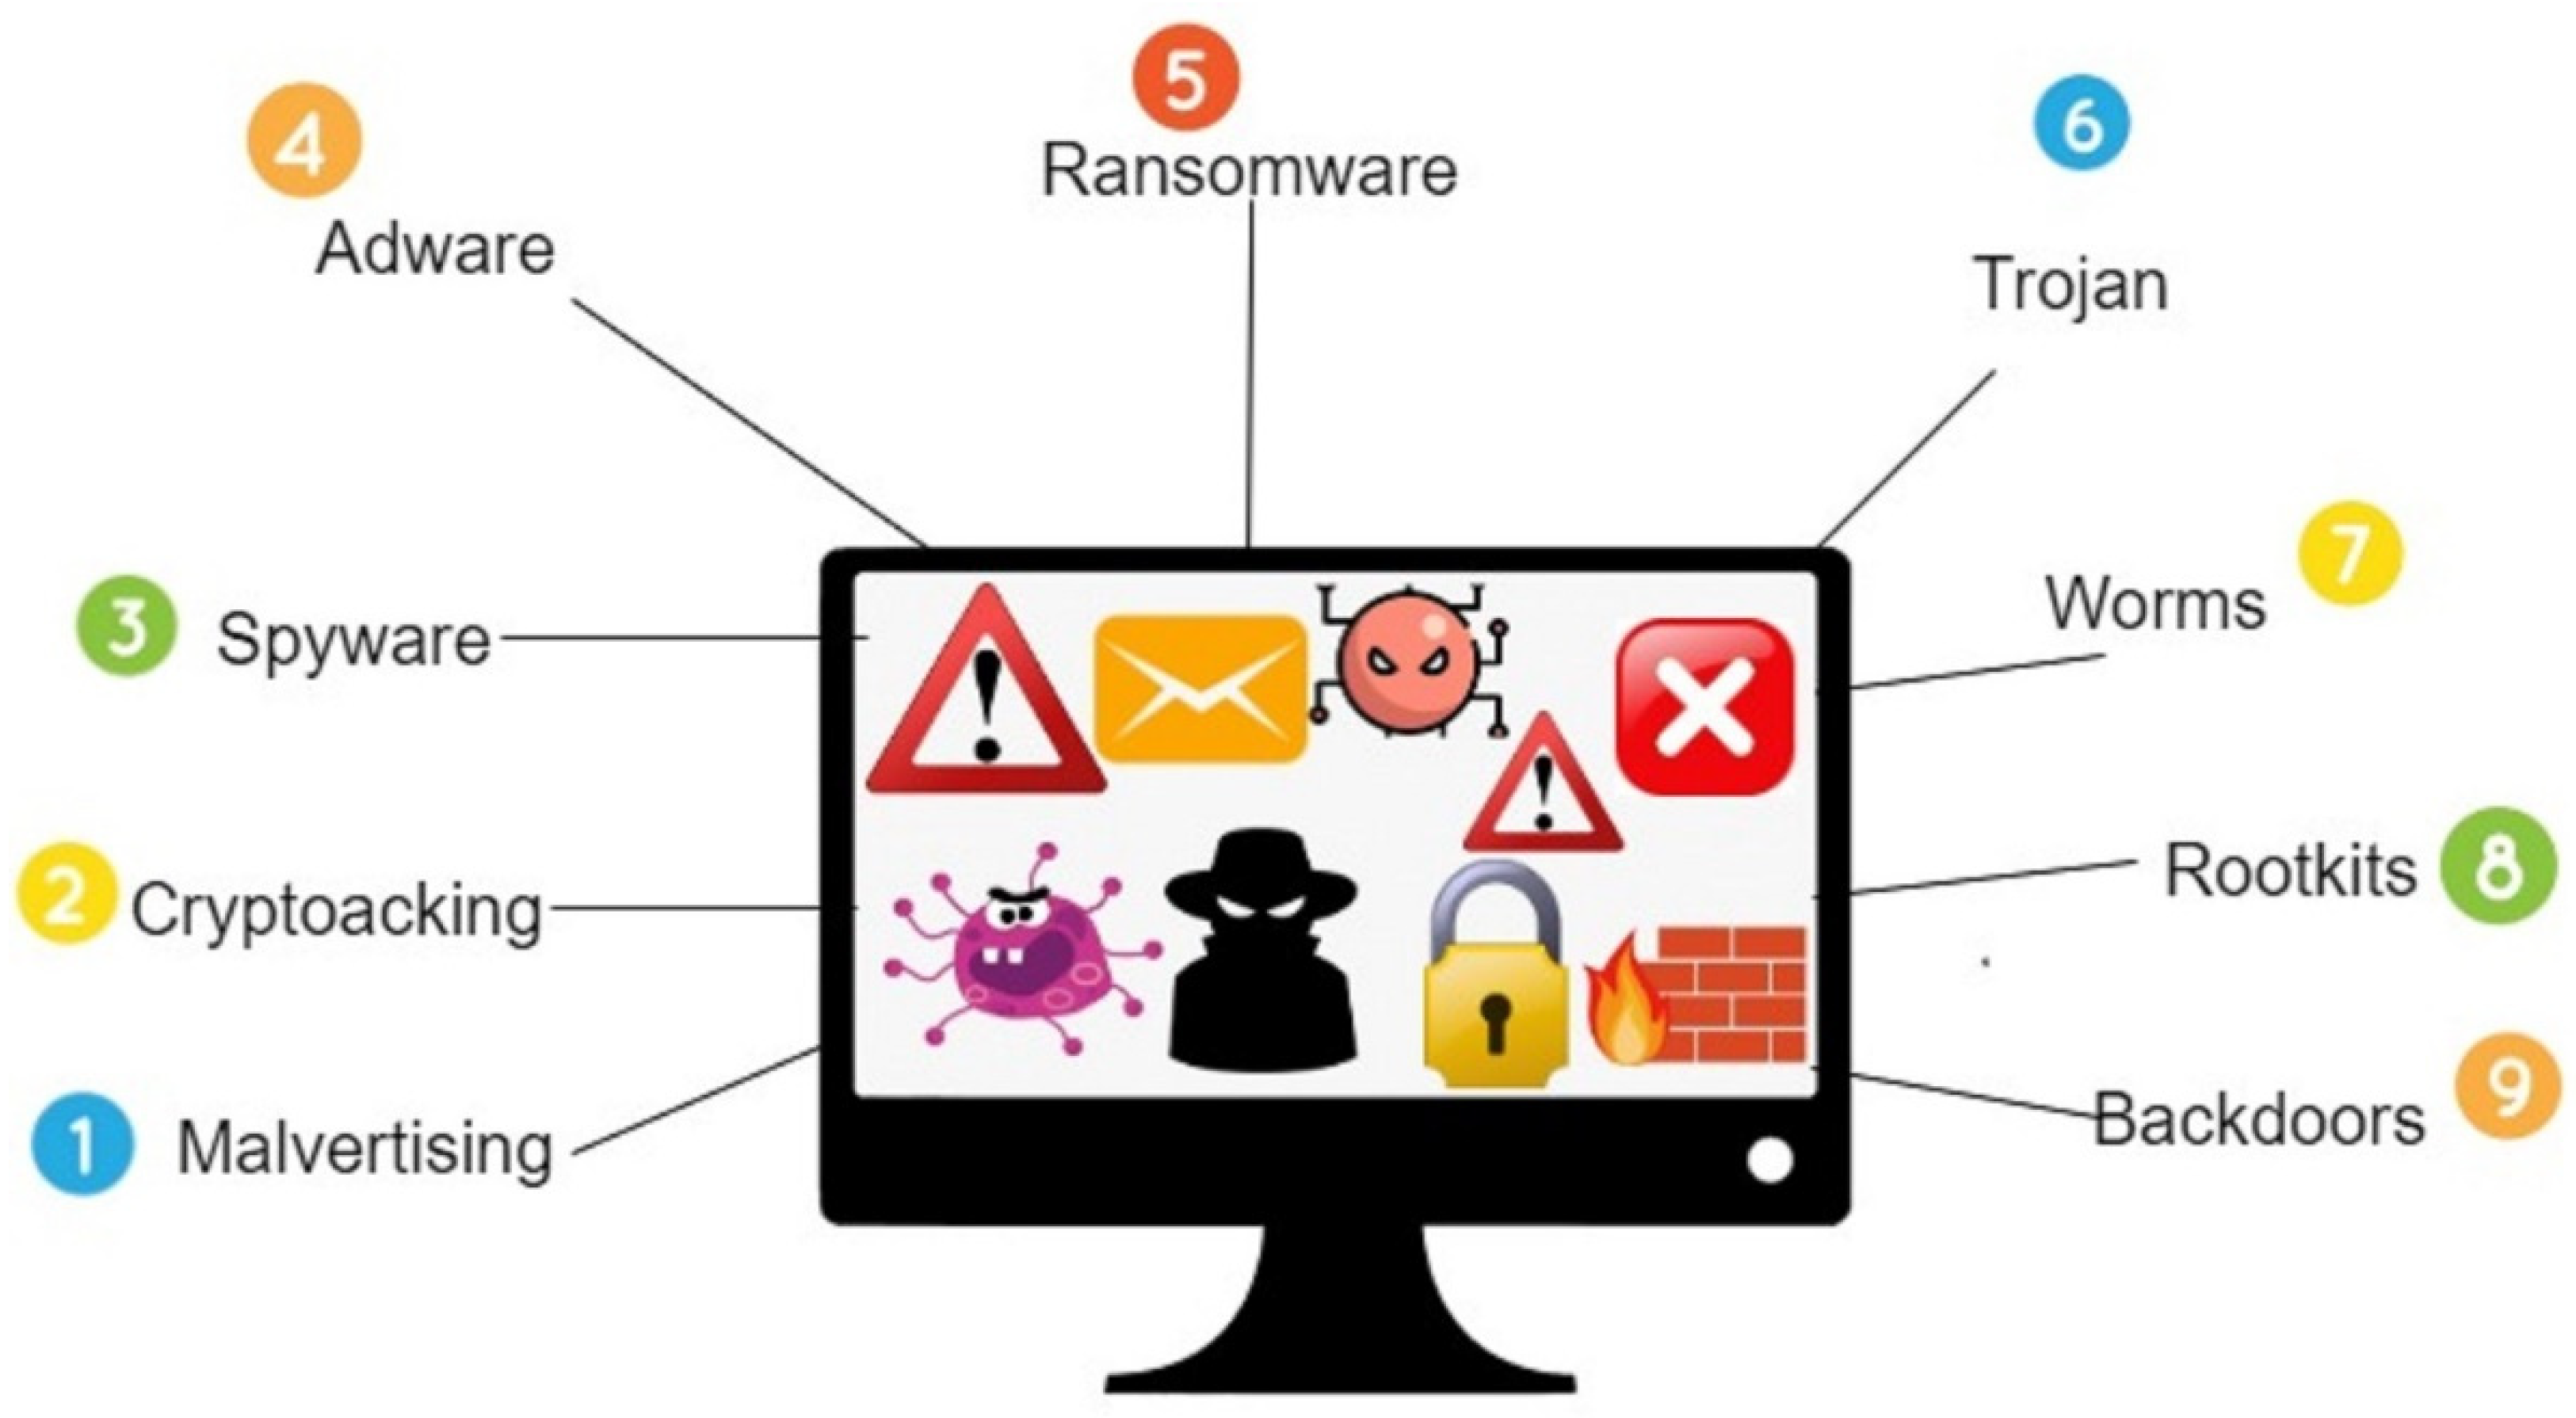 Malware analysis  No threats detected